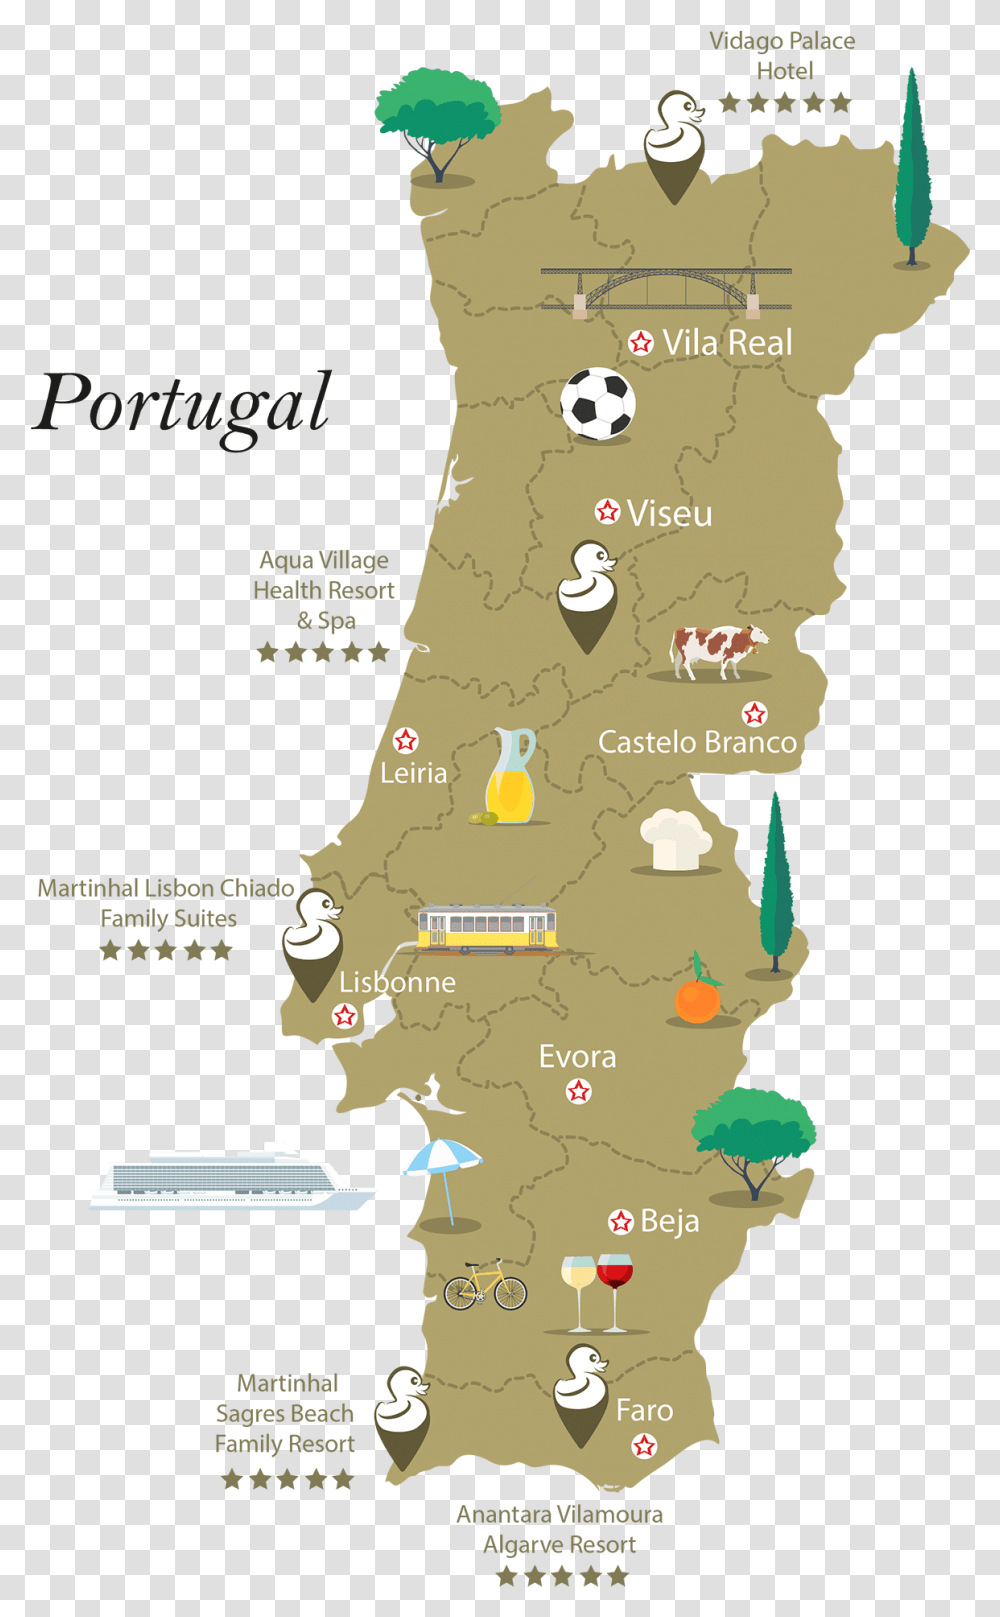 Little Guest Hotels Collection Portugal Tour Guide Map, Diagram, Plot, Atlas, Poster Transparent Png